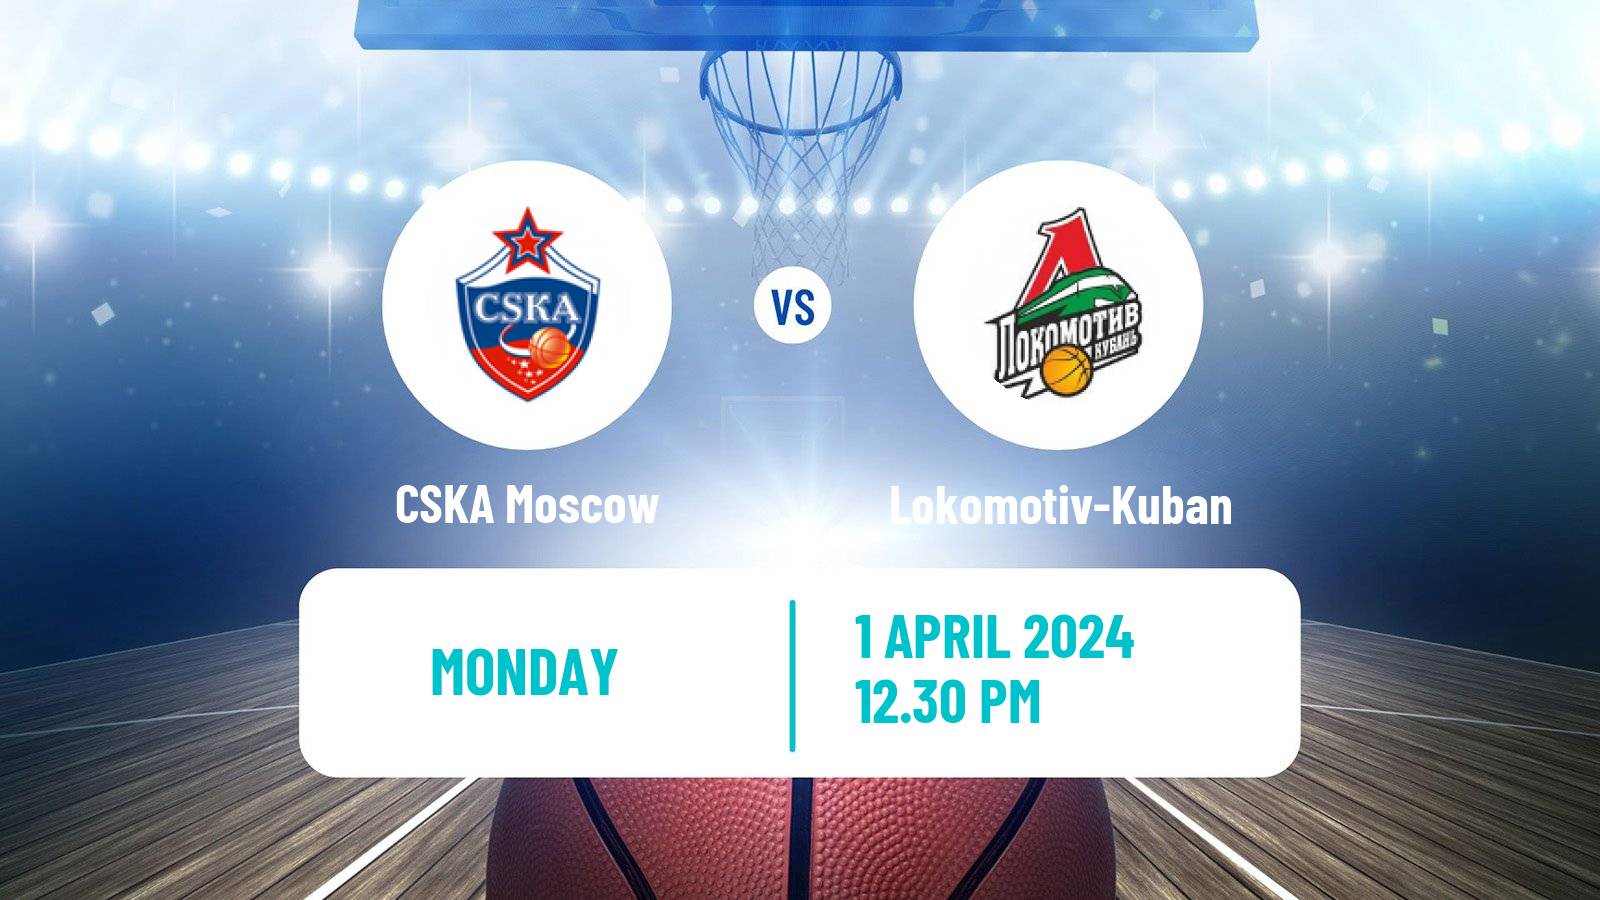 Basketball VTB United League CSKA Moscow - Lokomotiv-Kuban